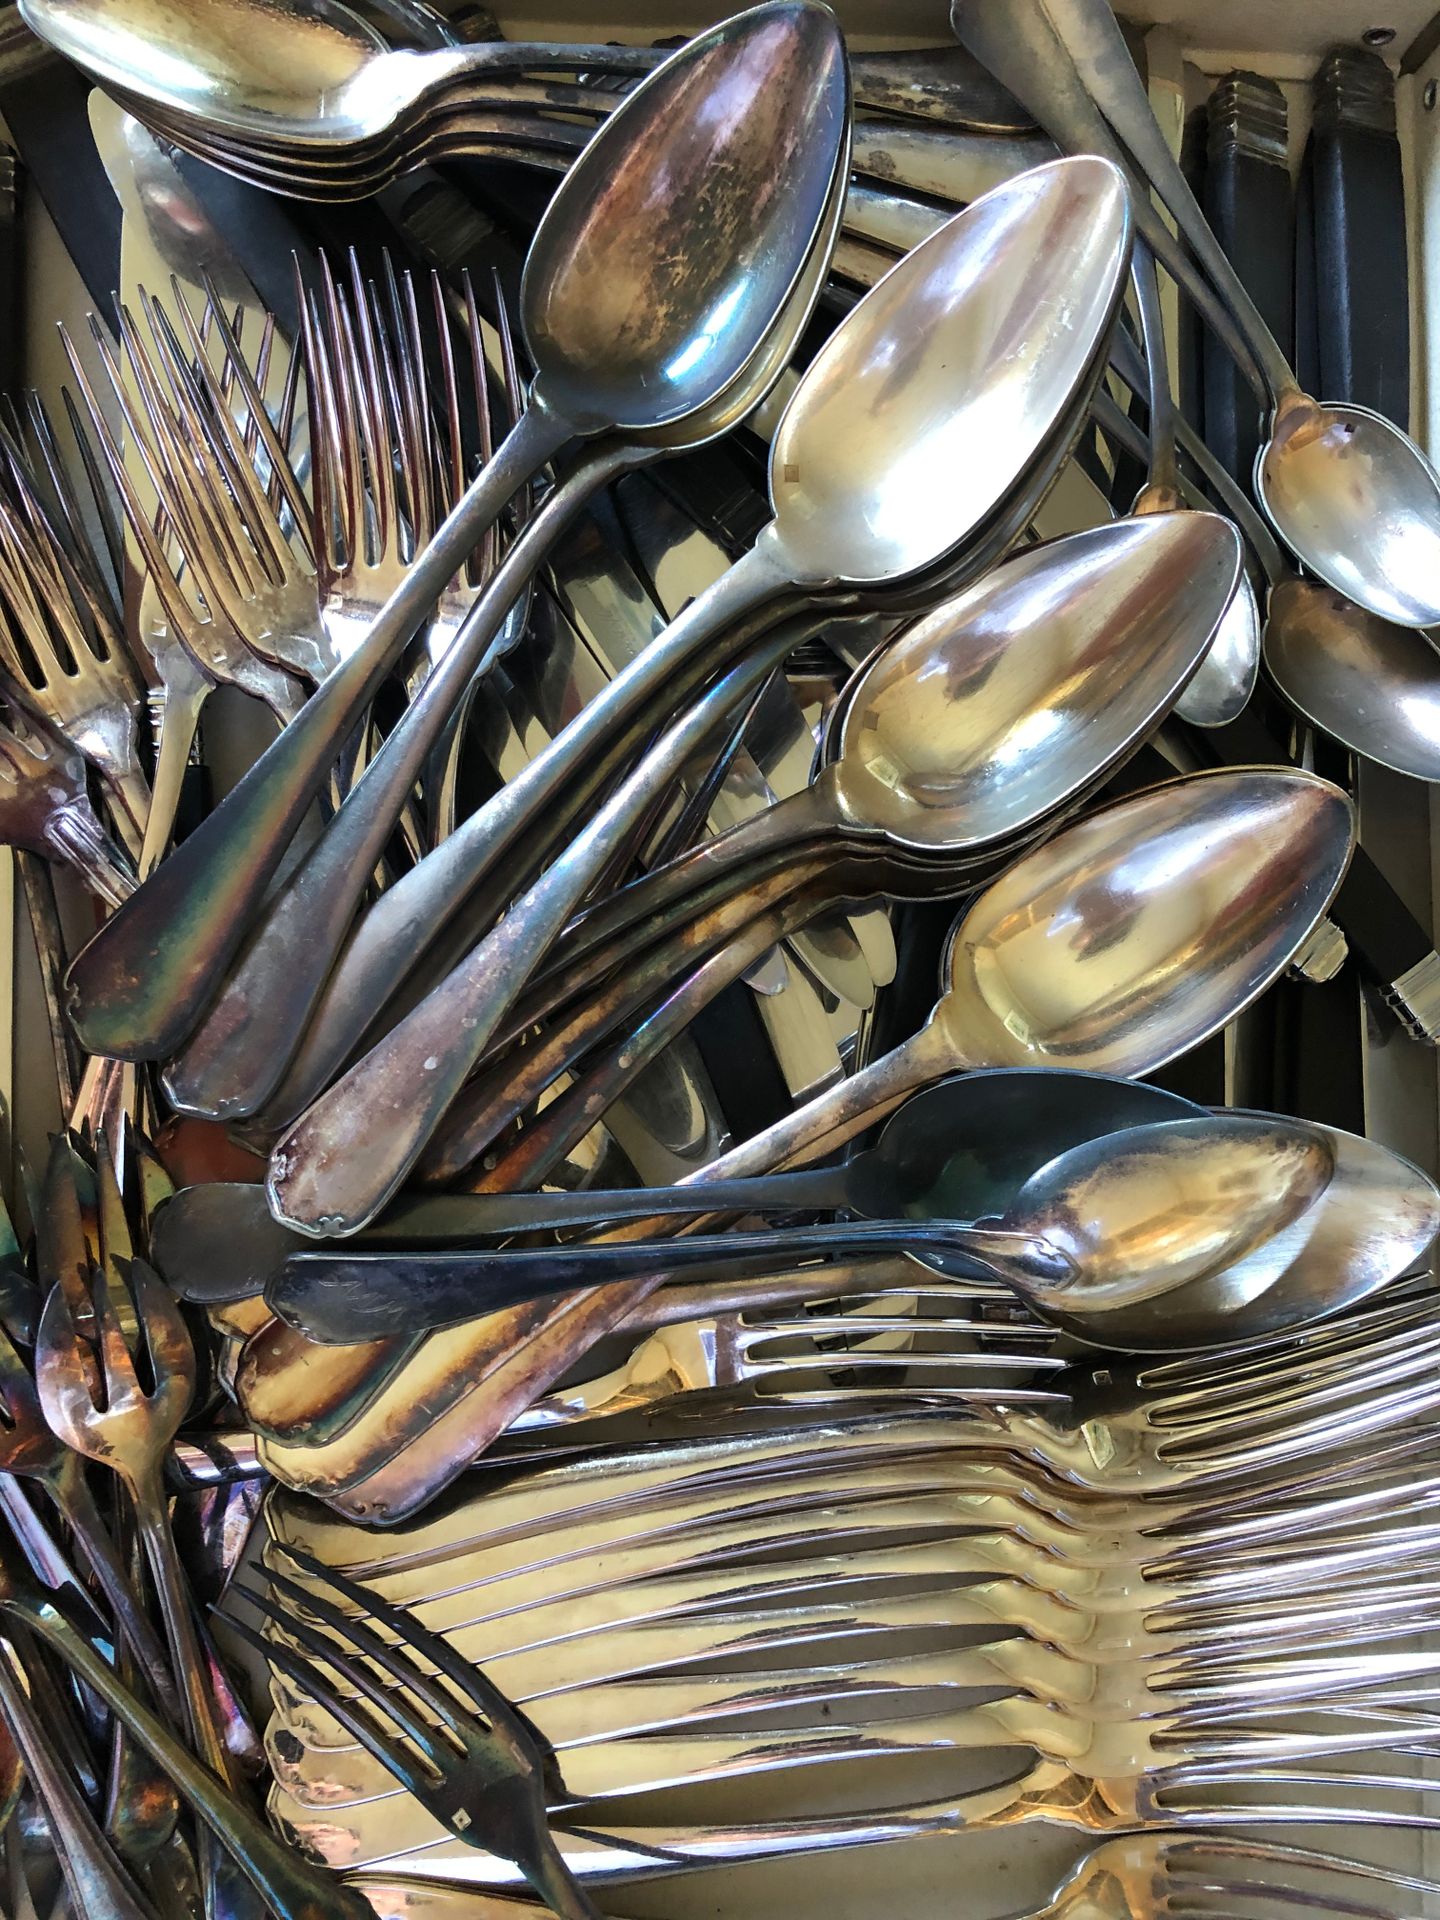 Null 本拍品为镀银金属，包括:

- CHRISTOFLE，一个家庭主妇的角色

- 英式糖碗

- 小盒子

- 廷伯勒

- 高脚杯

- 烛台

- &hellip;